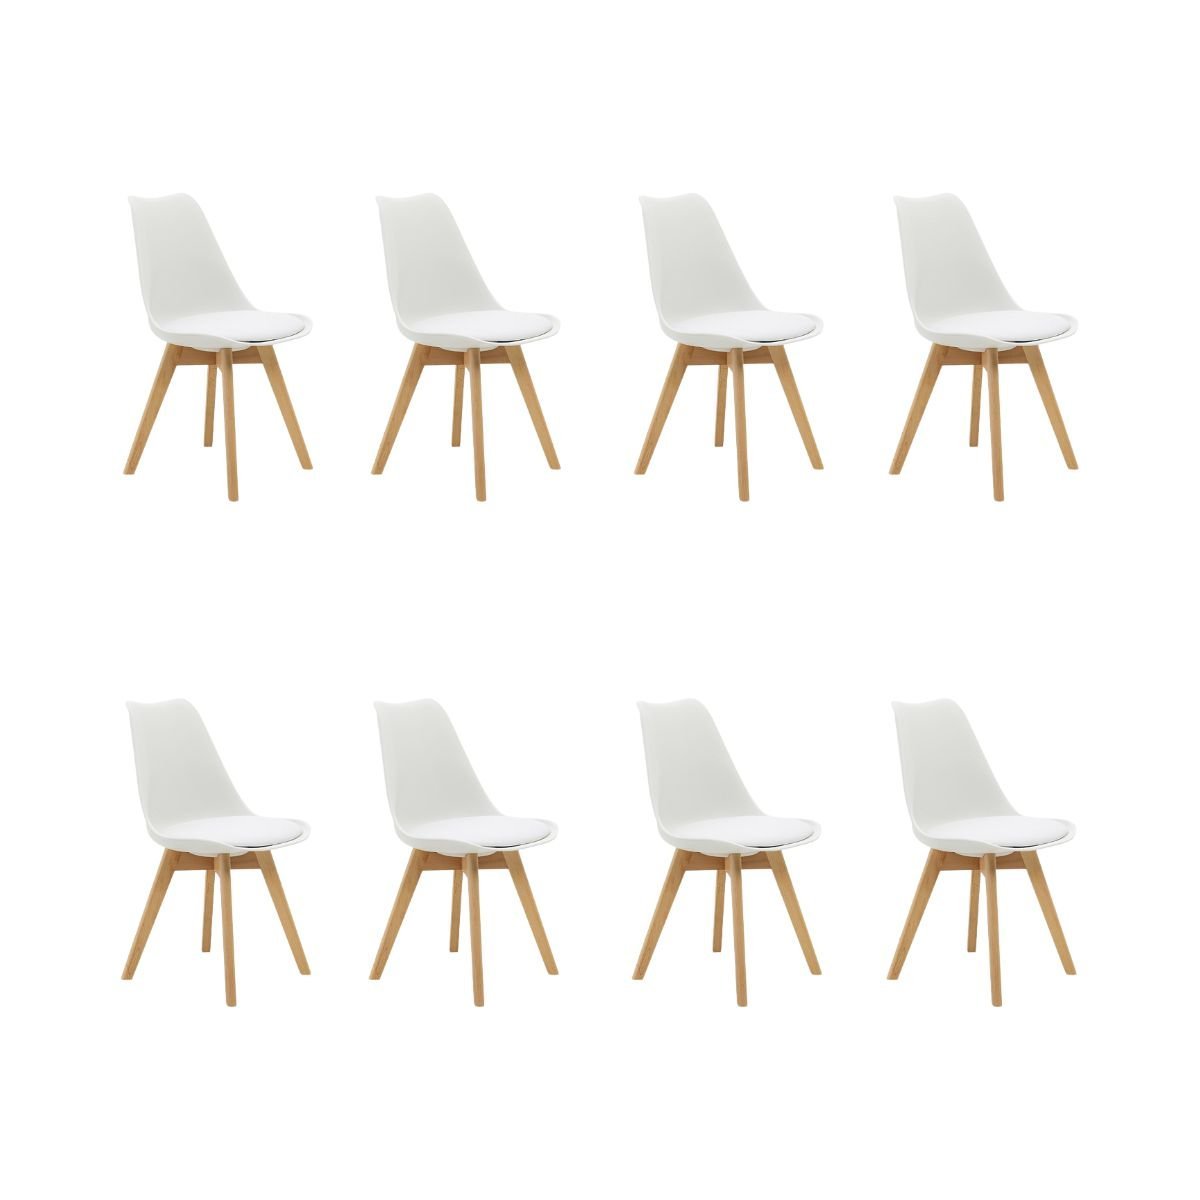 Kit 8 Cadeiras Saarinen Wood Estofada Pés de Madeira - Branco